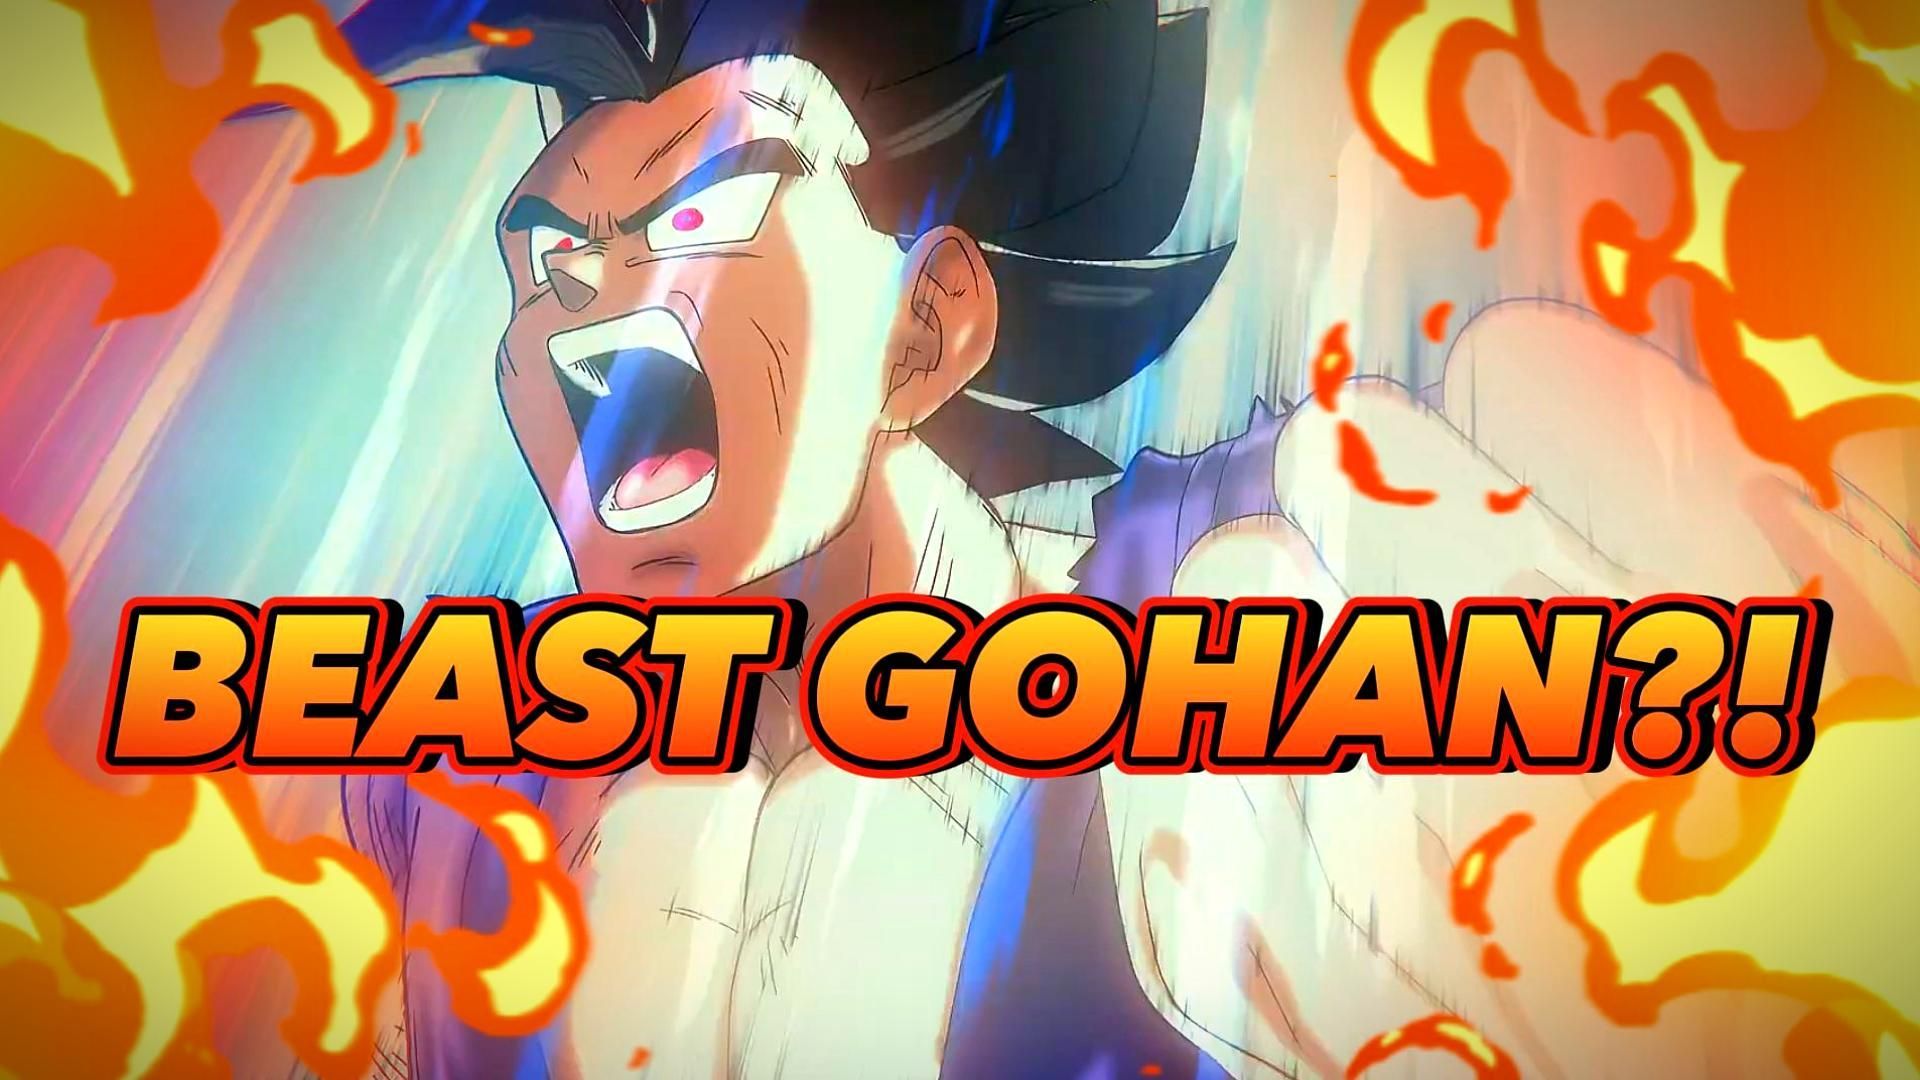 Dragon Ball Super: Why Beast Gohan vs Goku Needs to Happen ASAP